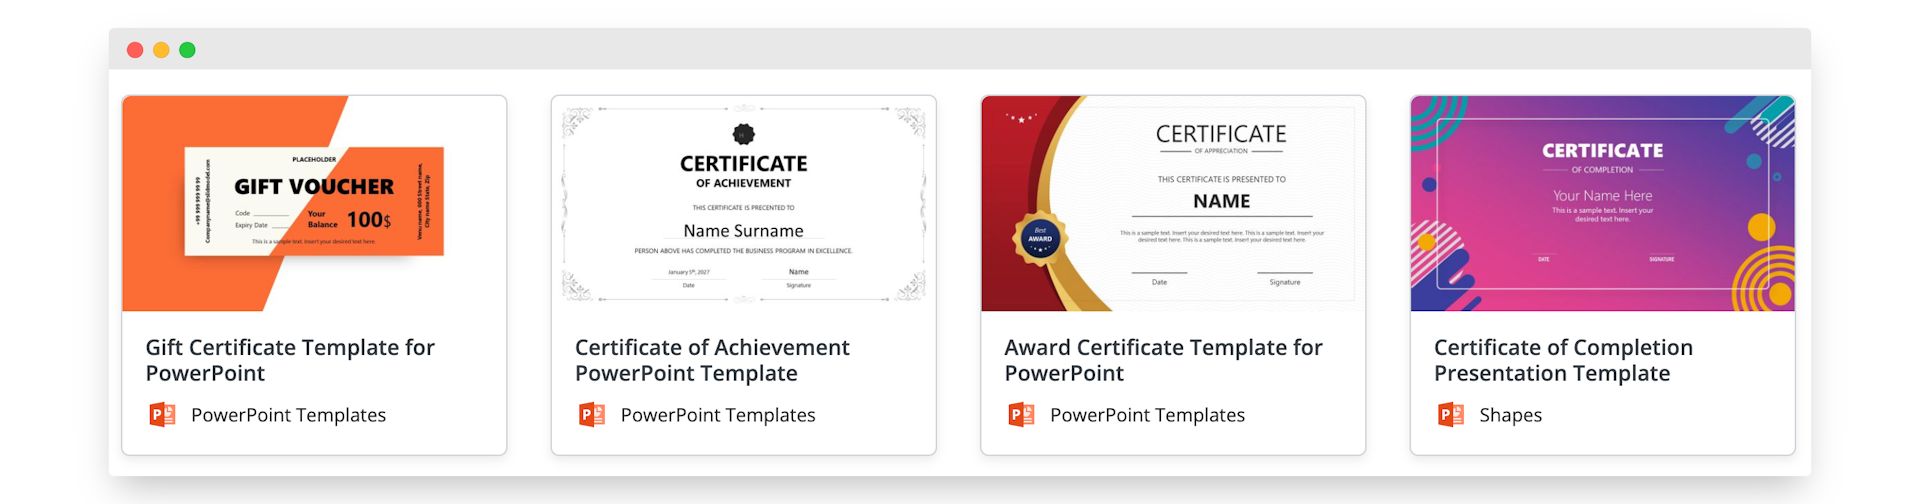 SlideModel powerpoint certificate template.